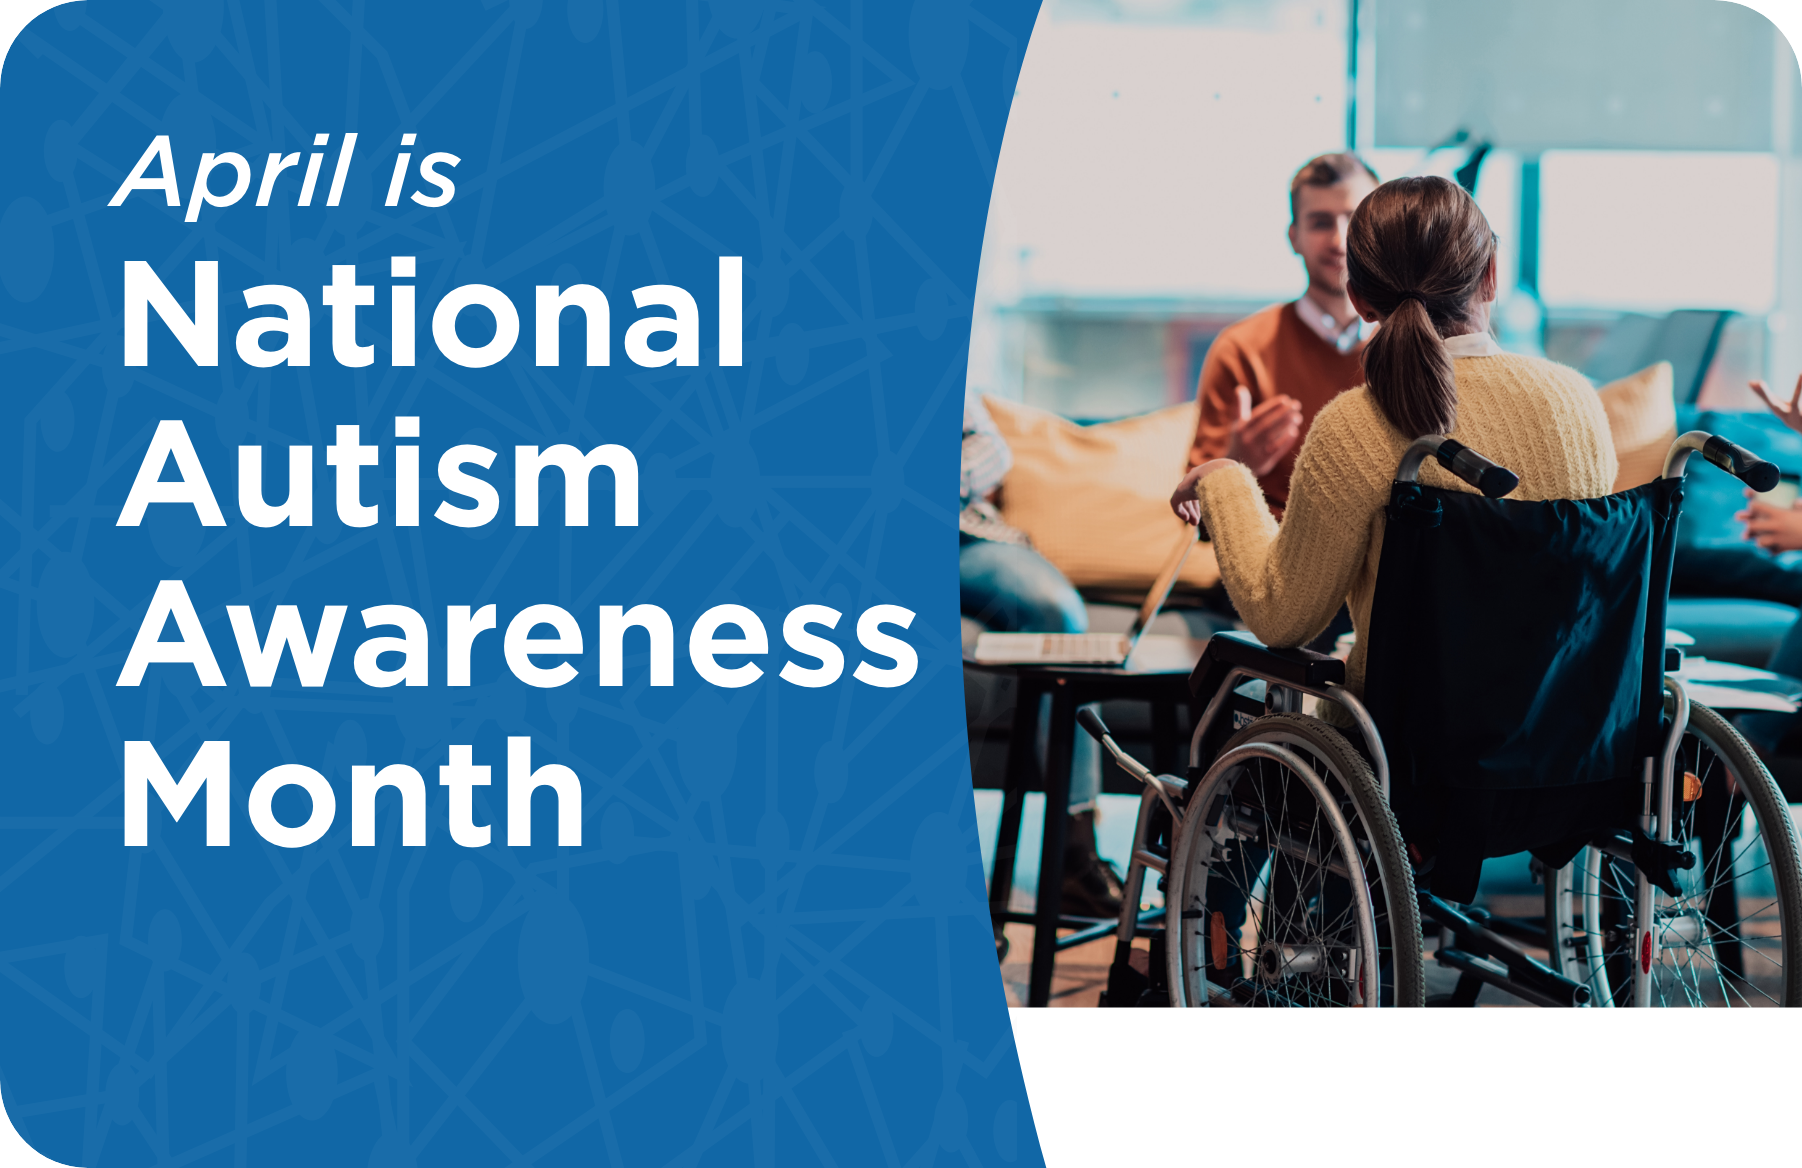 National Developmental Disabilities Awareness Month